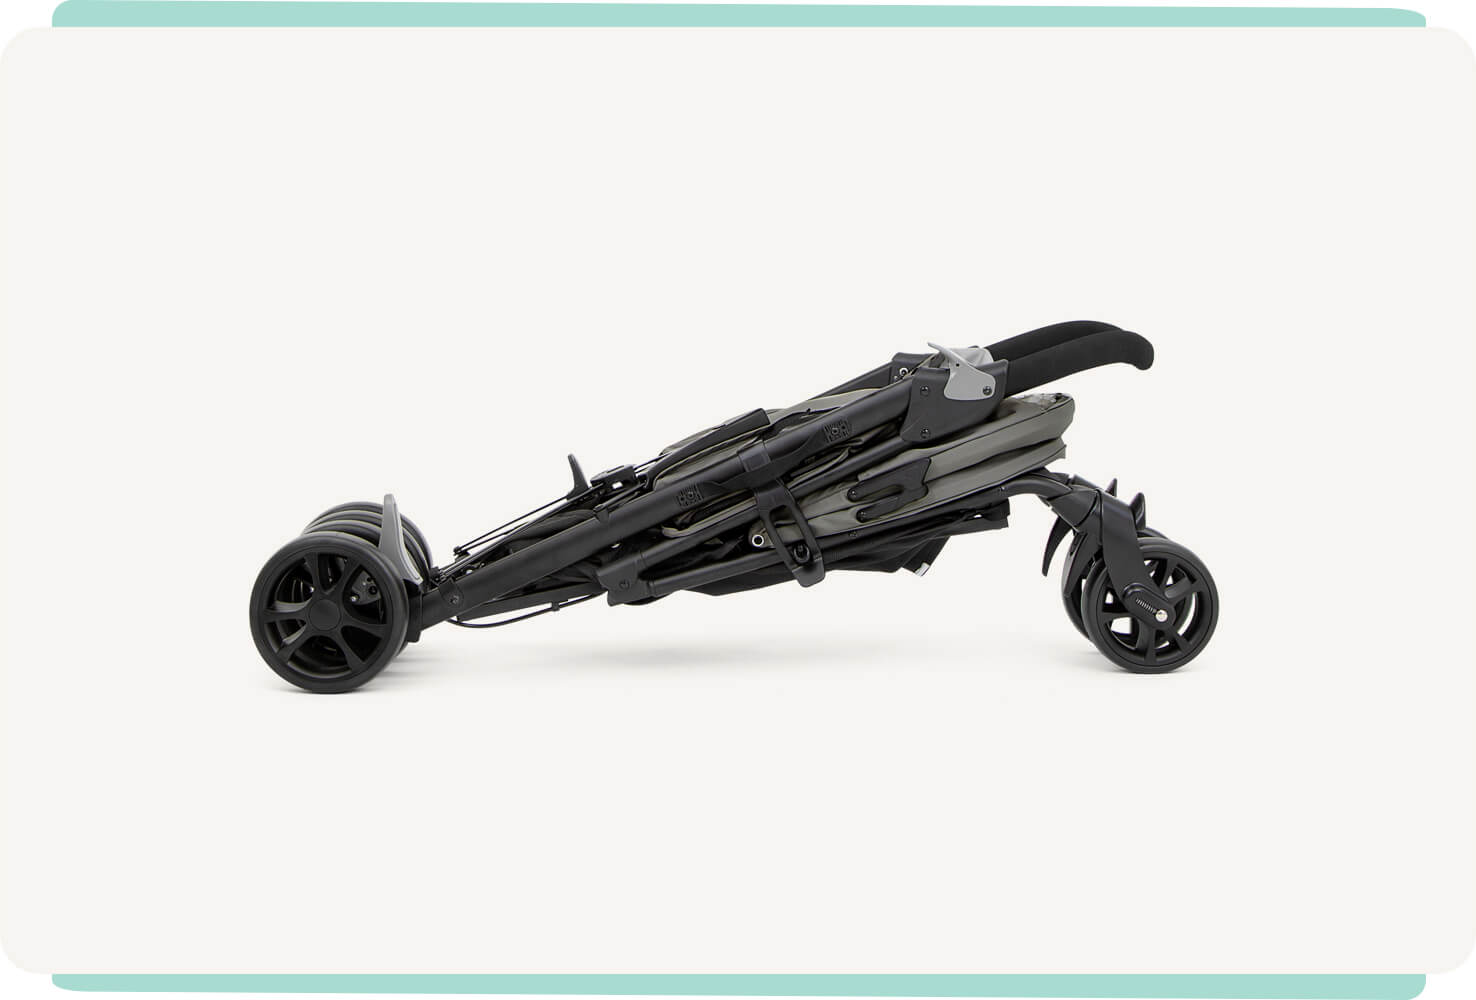   A folded Joie Brisk LX stroller in gray.